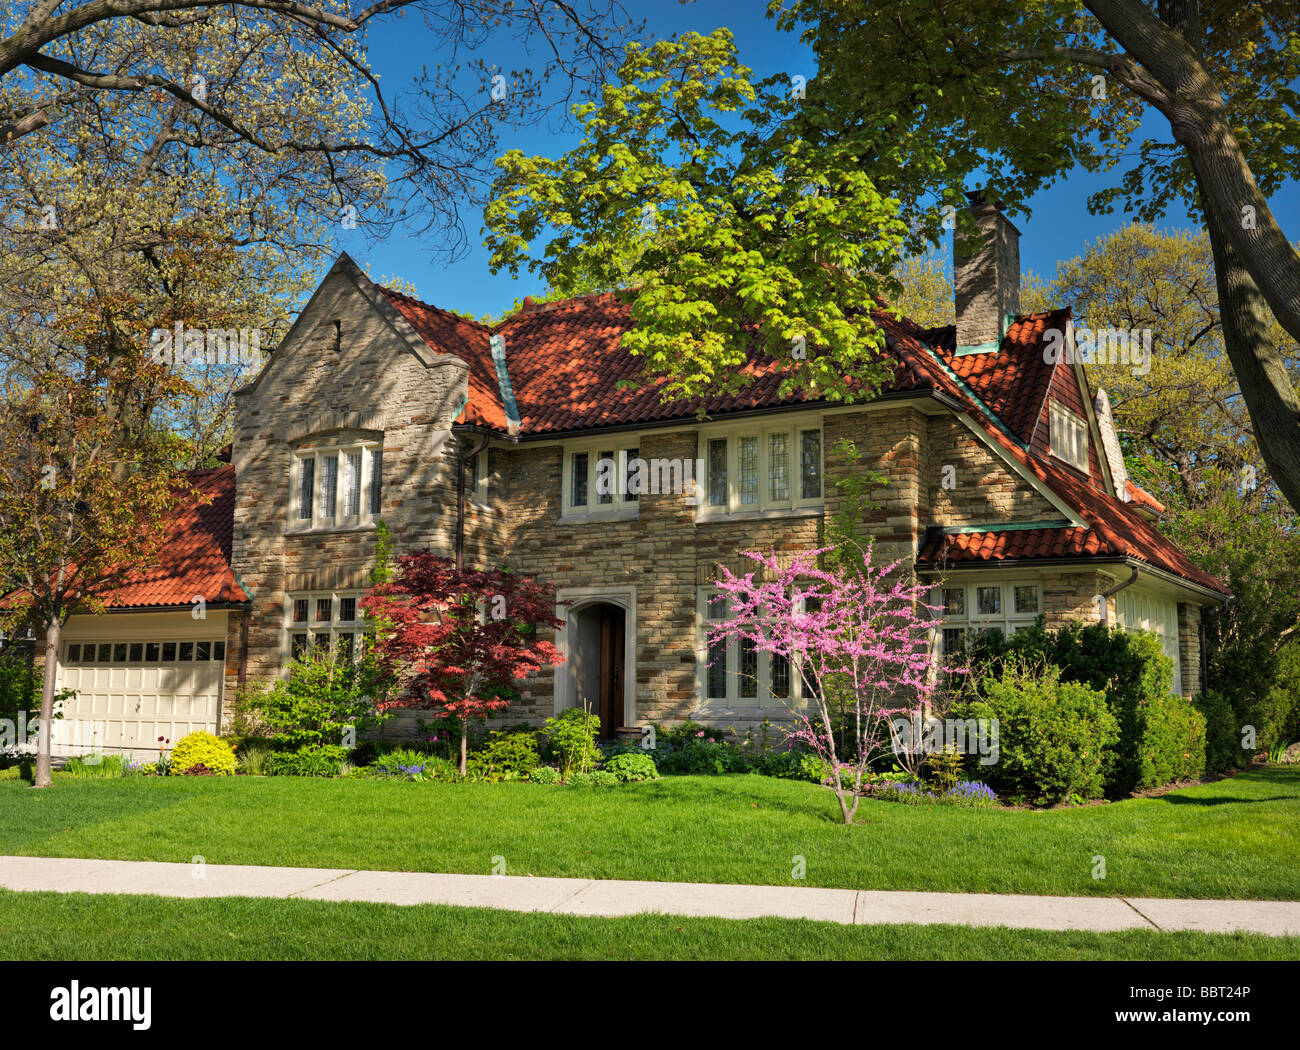 Beautiful family house springtime scenery Stock Photo - Alamy